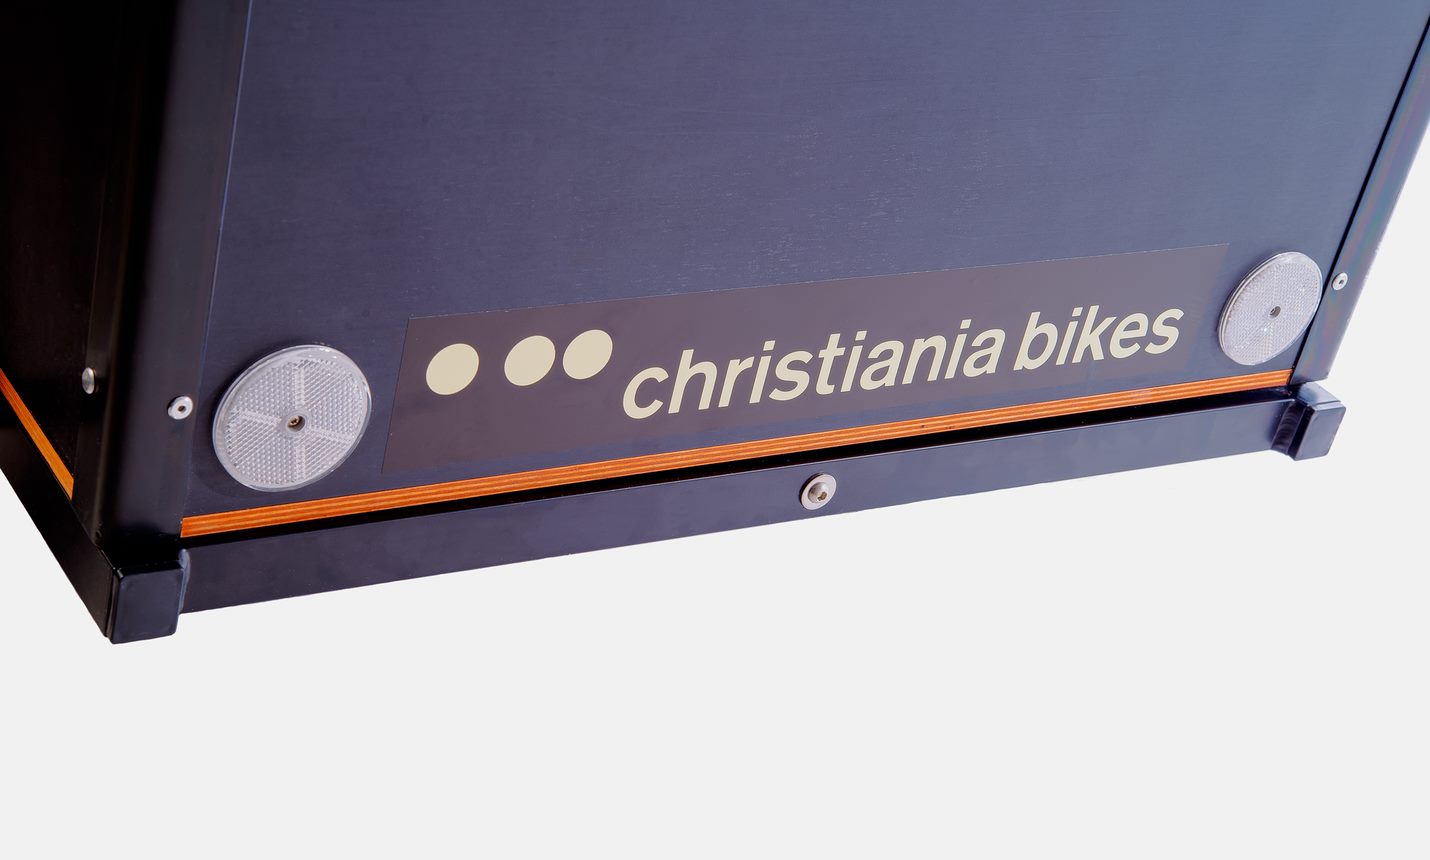 Christiania Classic Sloping Box Cargo Bike - The Danish cycling design icon